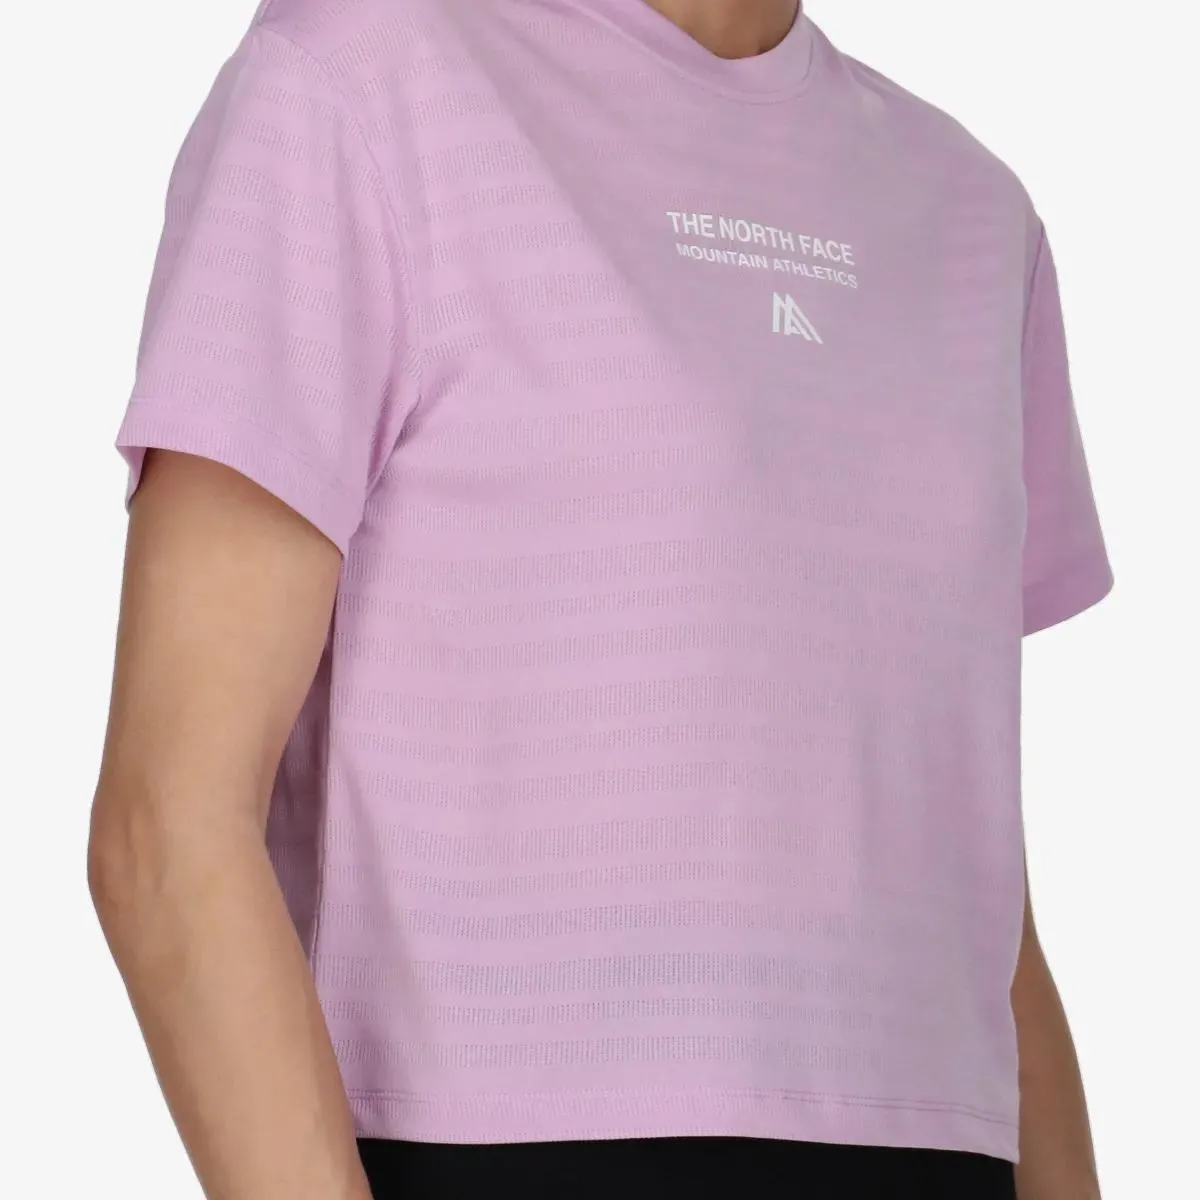 The North Face T-shirt Women’s Ma S/S Tee - Eu 